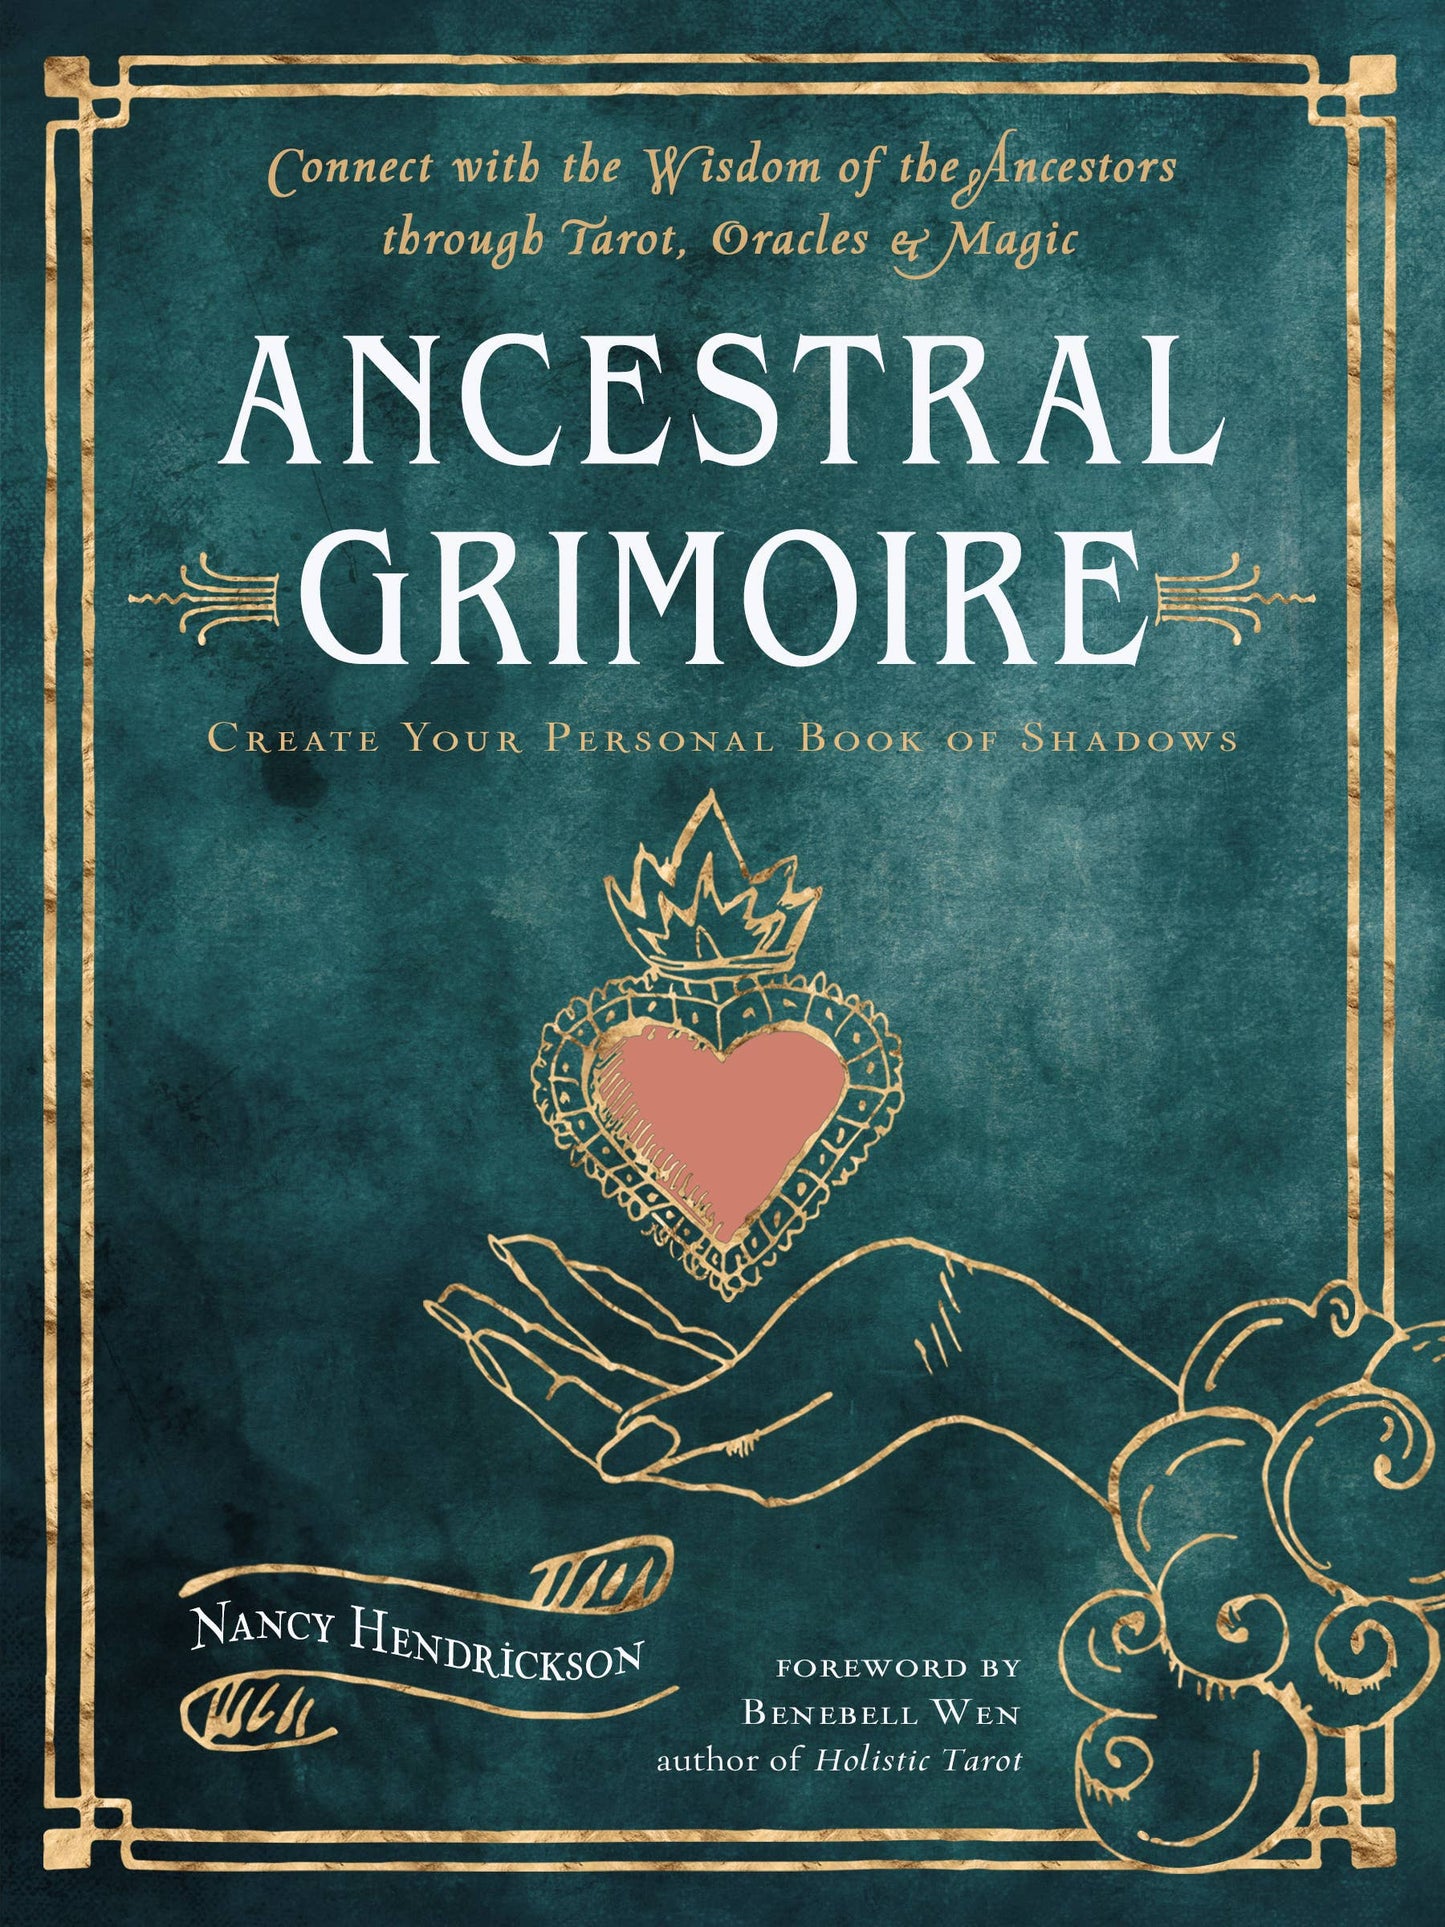 Ancestral Grimoire by Nancy Hendrickson